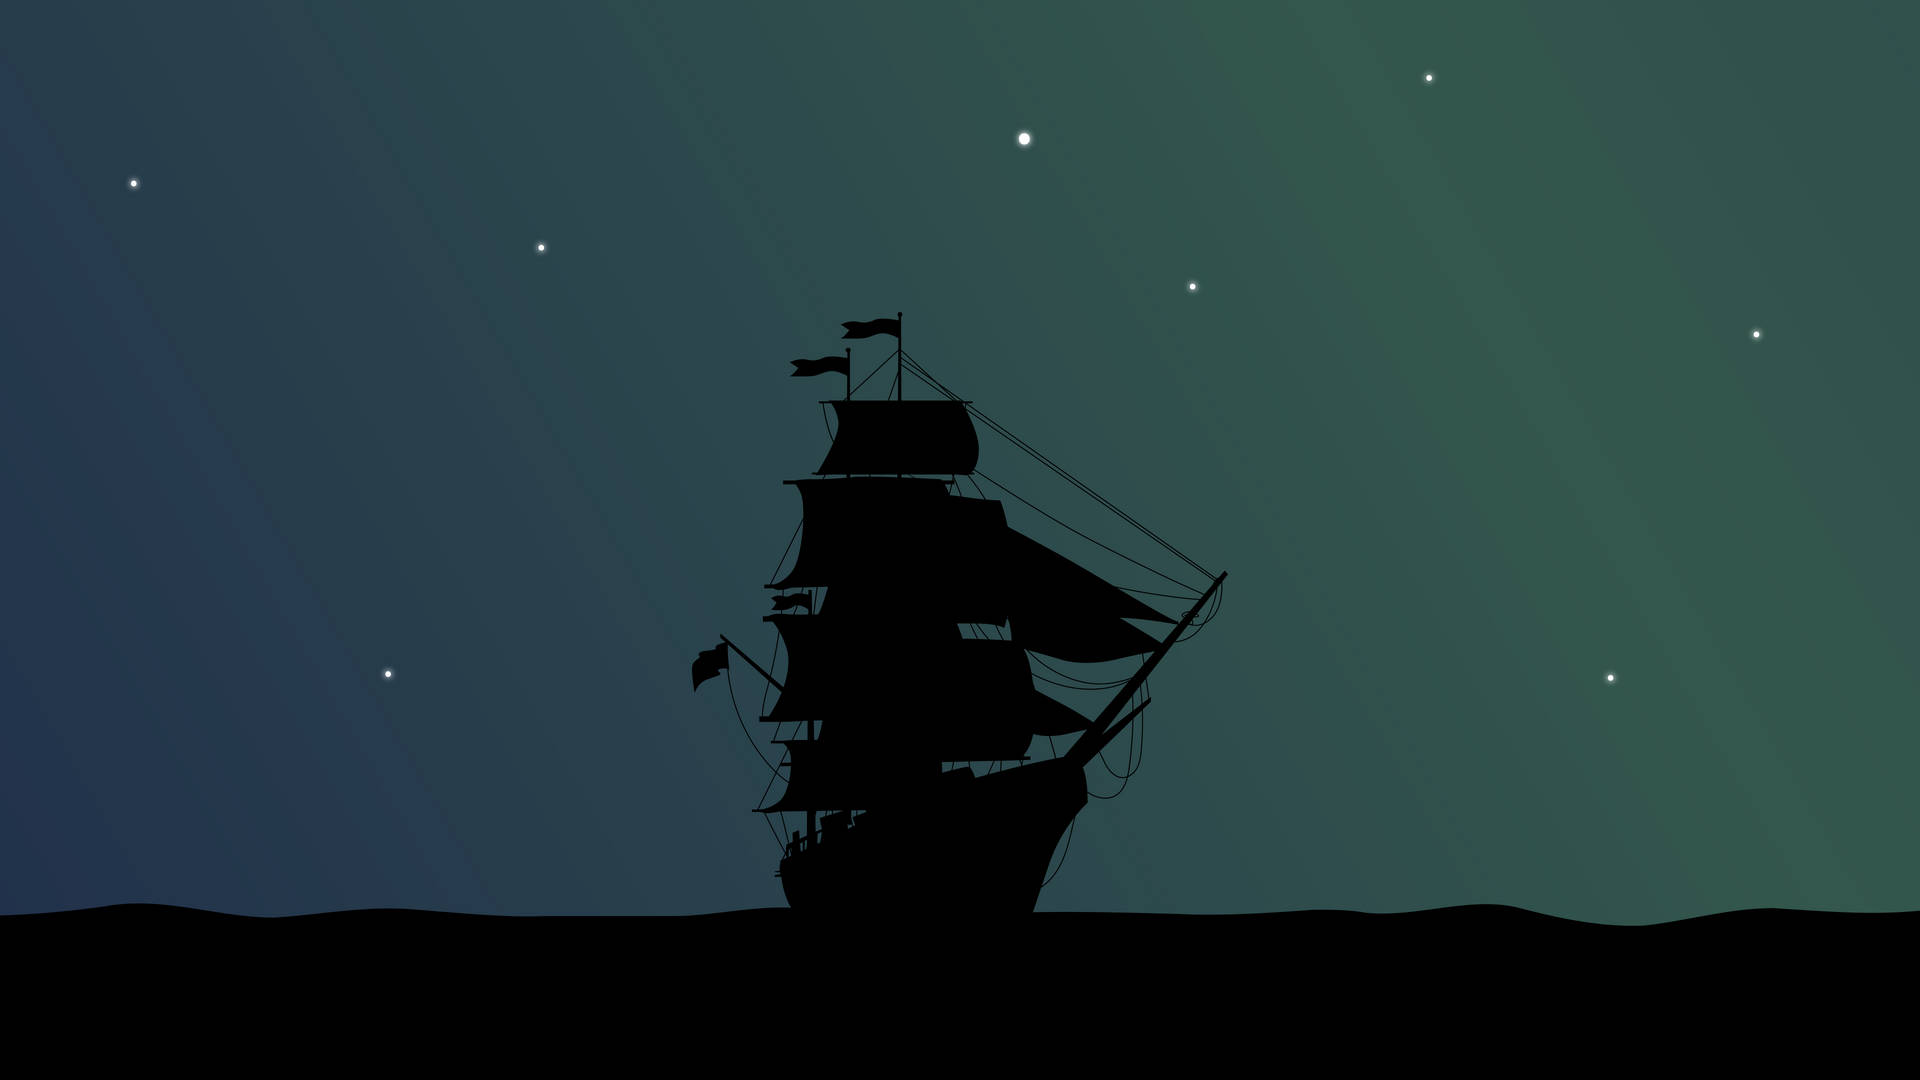 Pirate Ship Silhouette Art Wallpaper